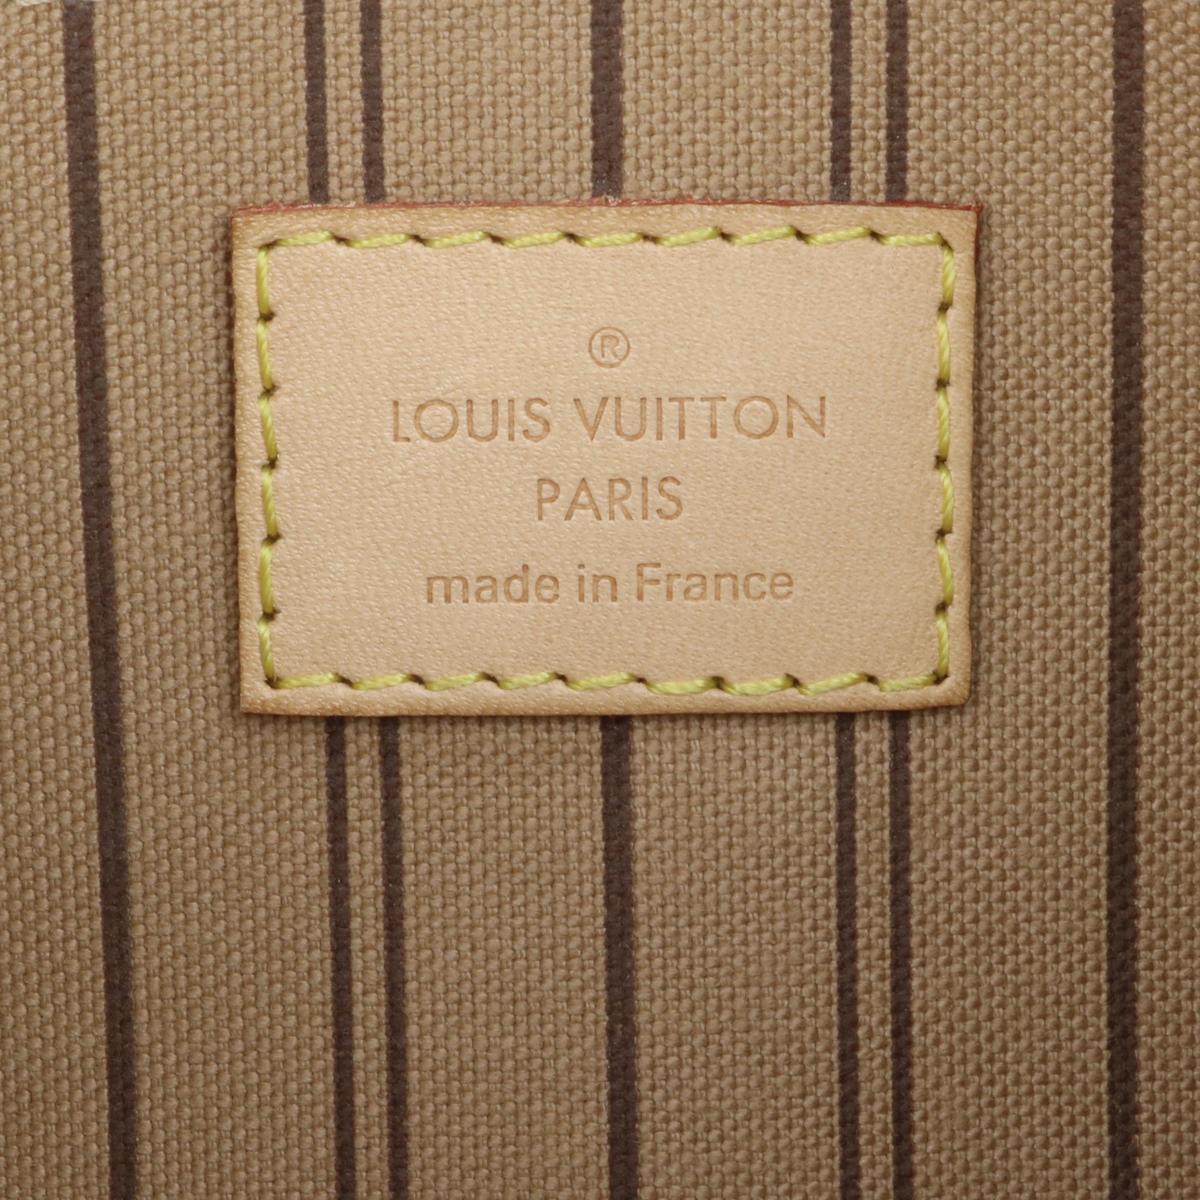 Louis Vuitton Neverfull MM Pochette Pouch in Monogram with Beige Interior 2016 10